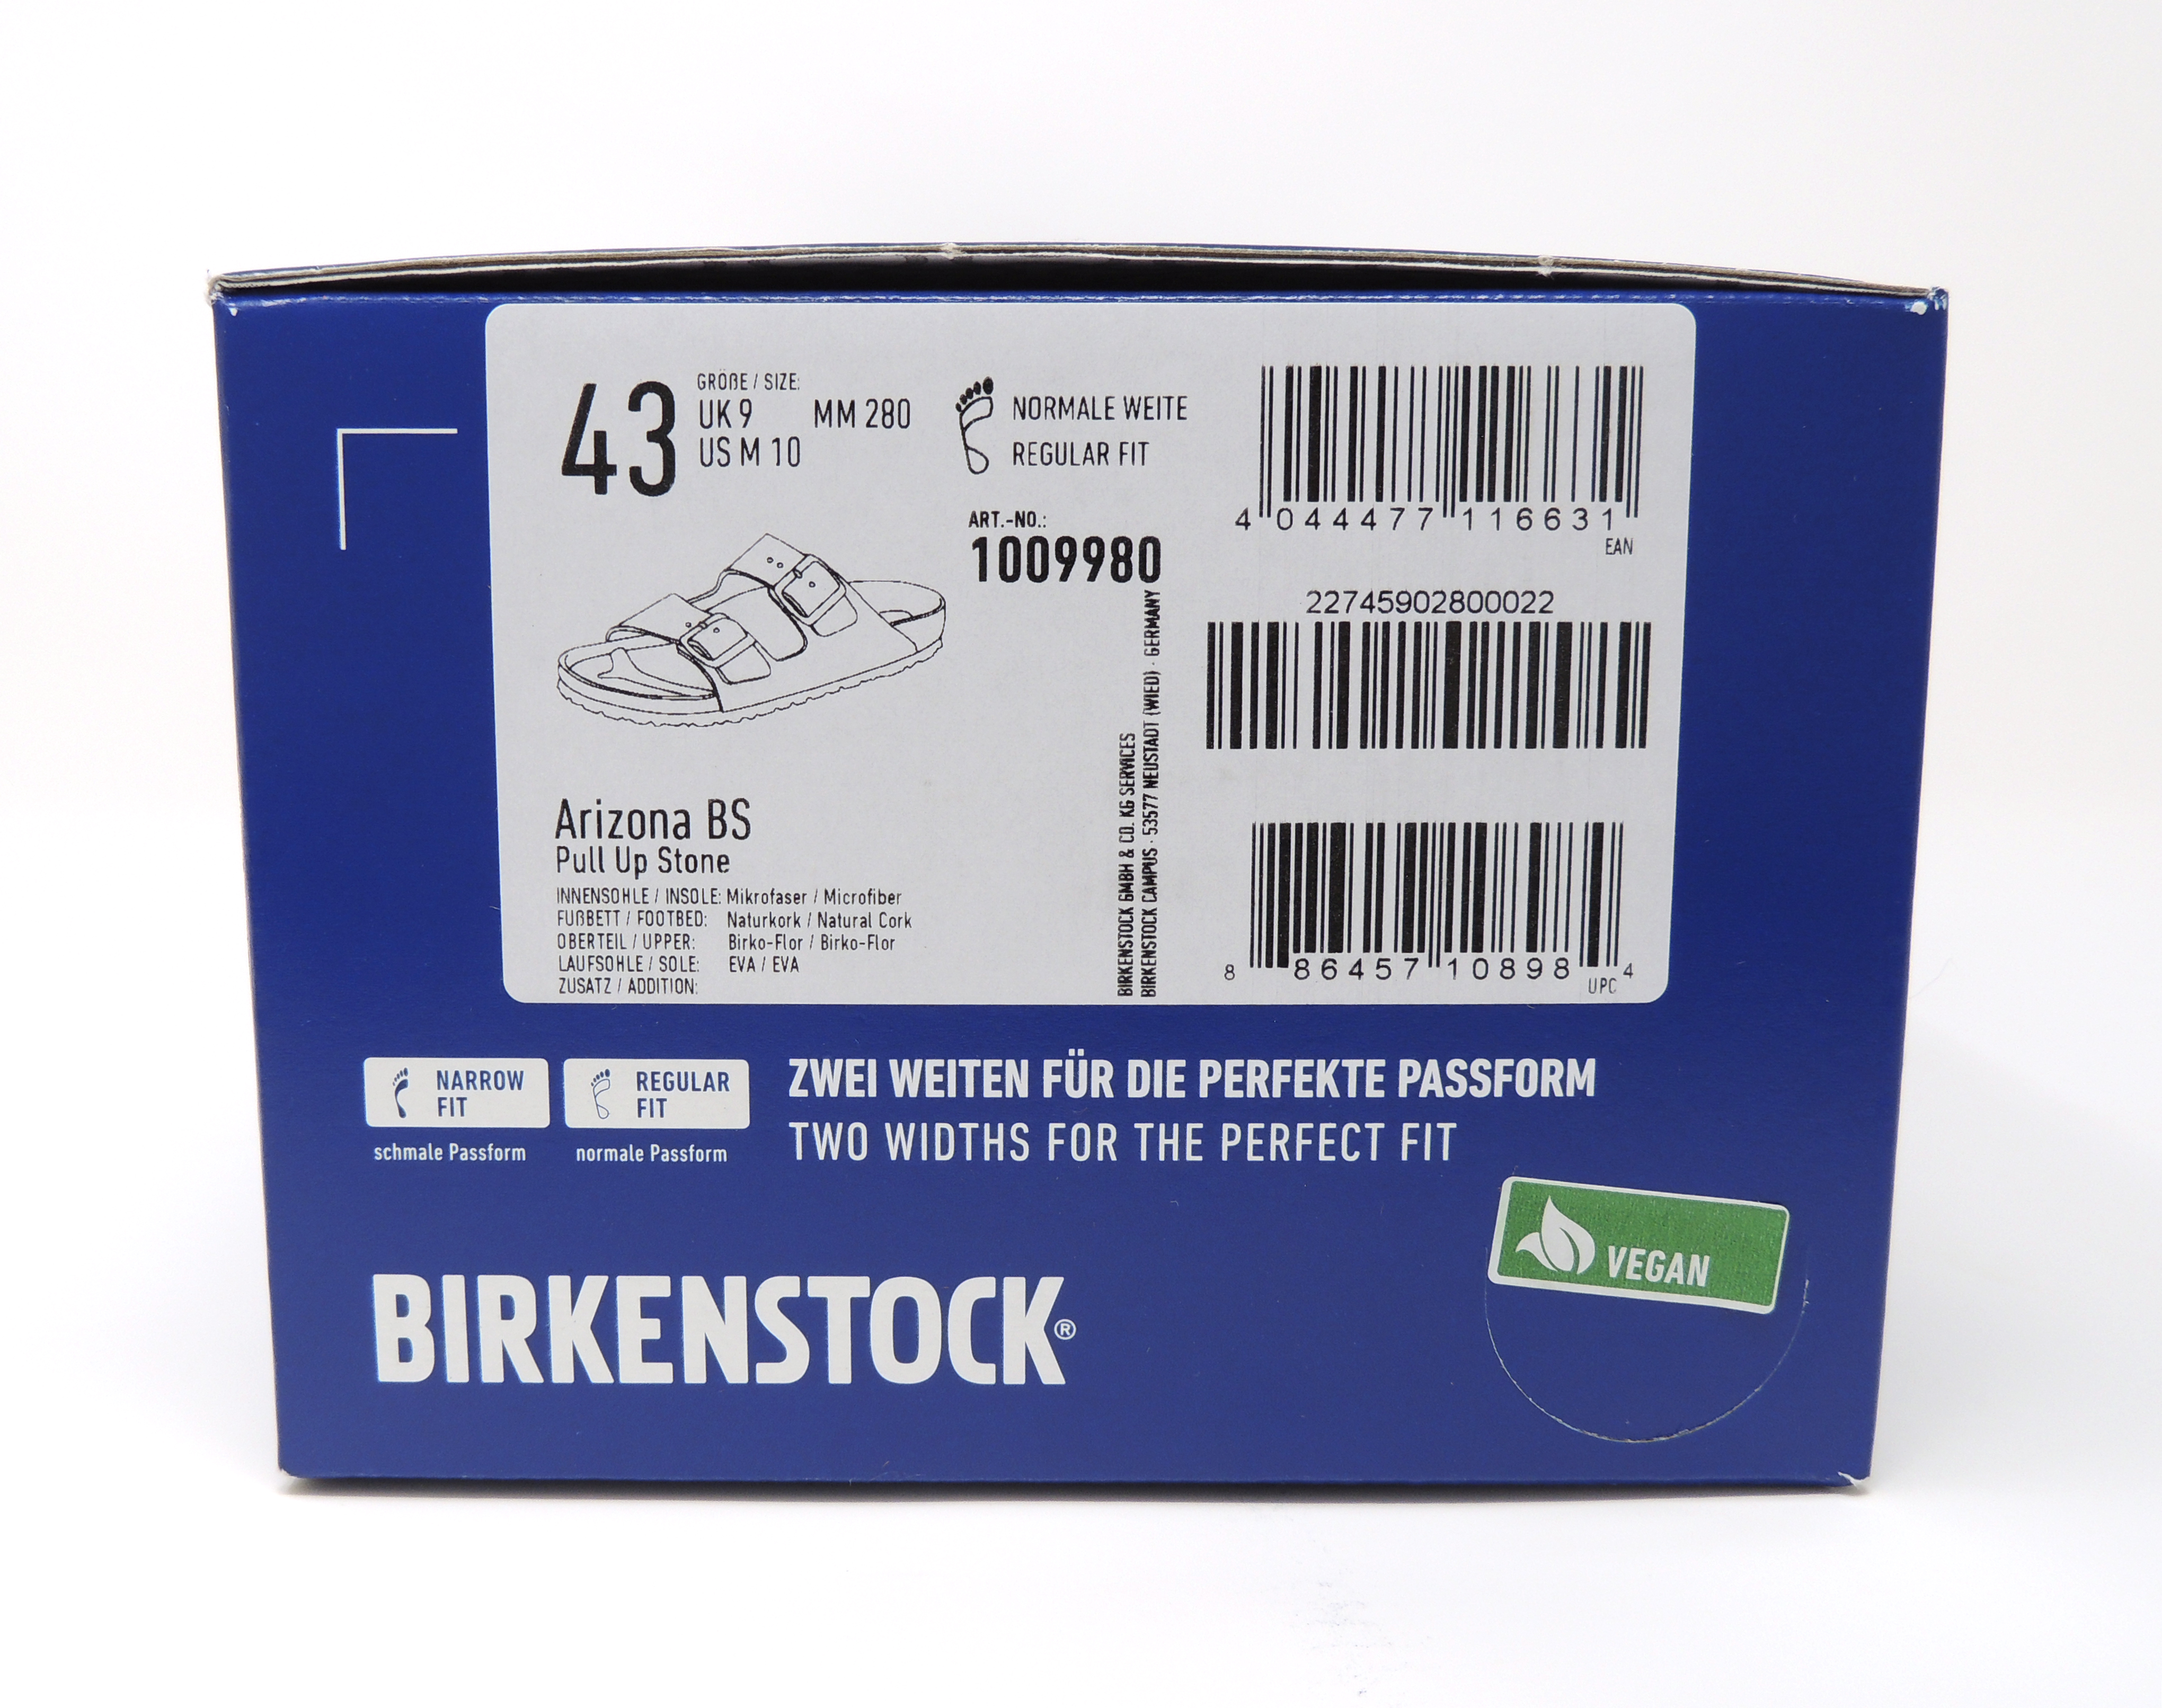 Are My Birkenstocks Fake? - Englin's 